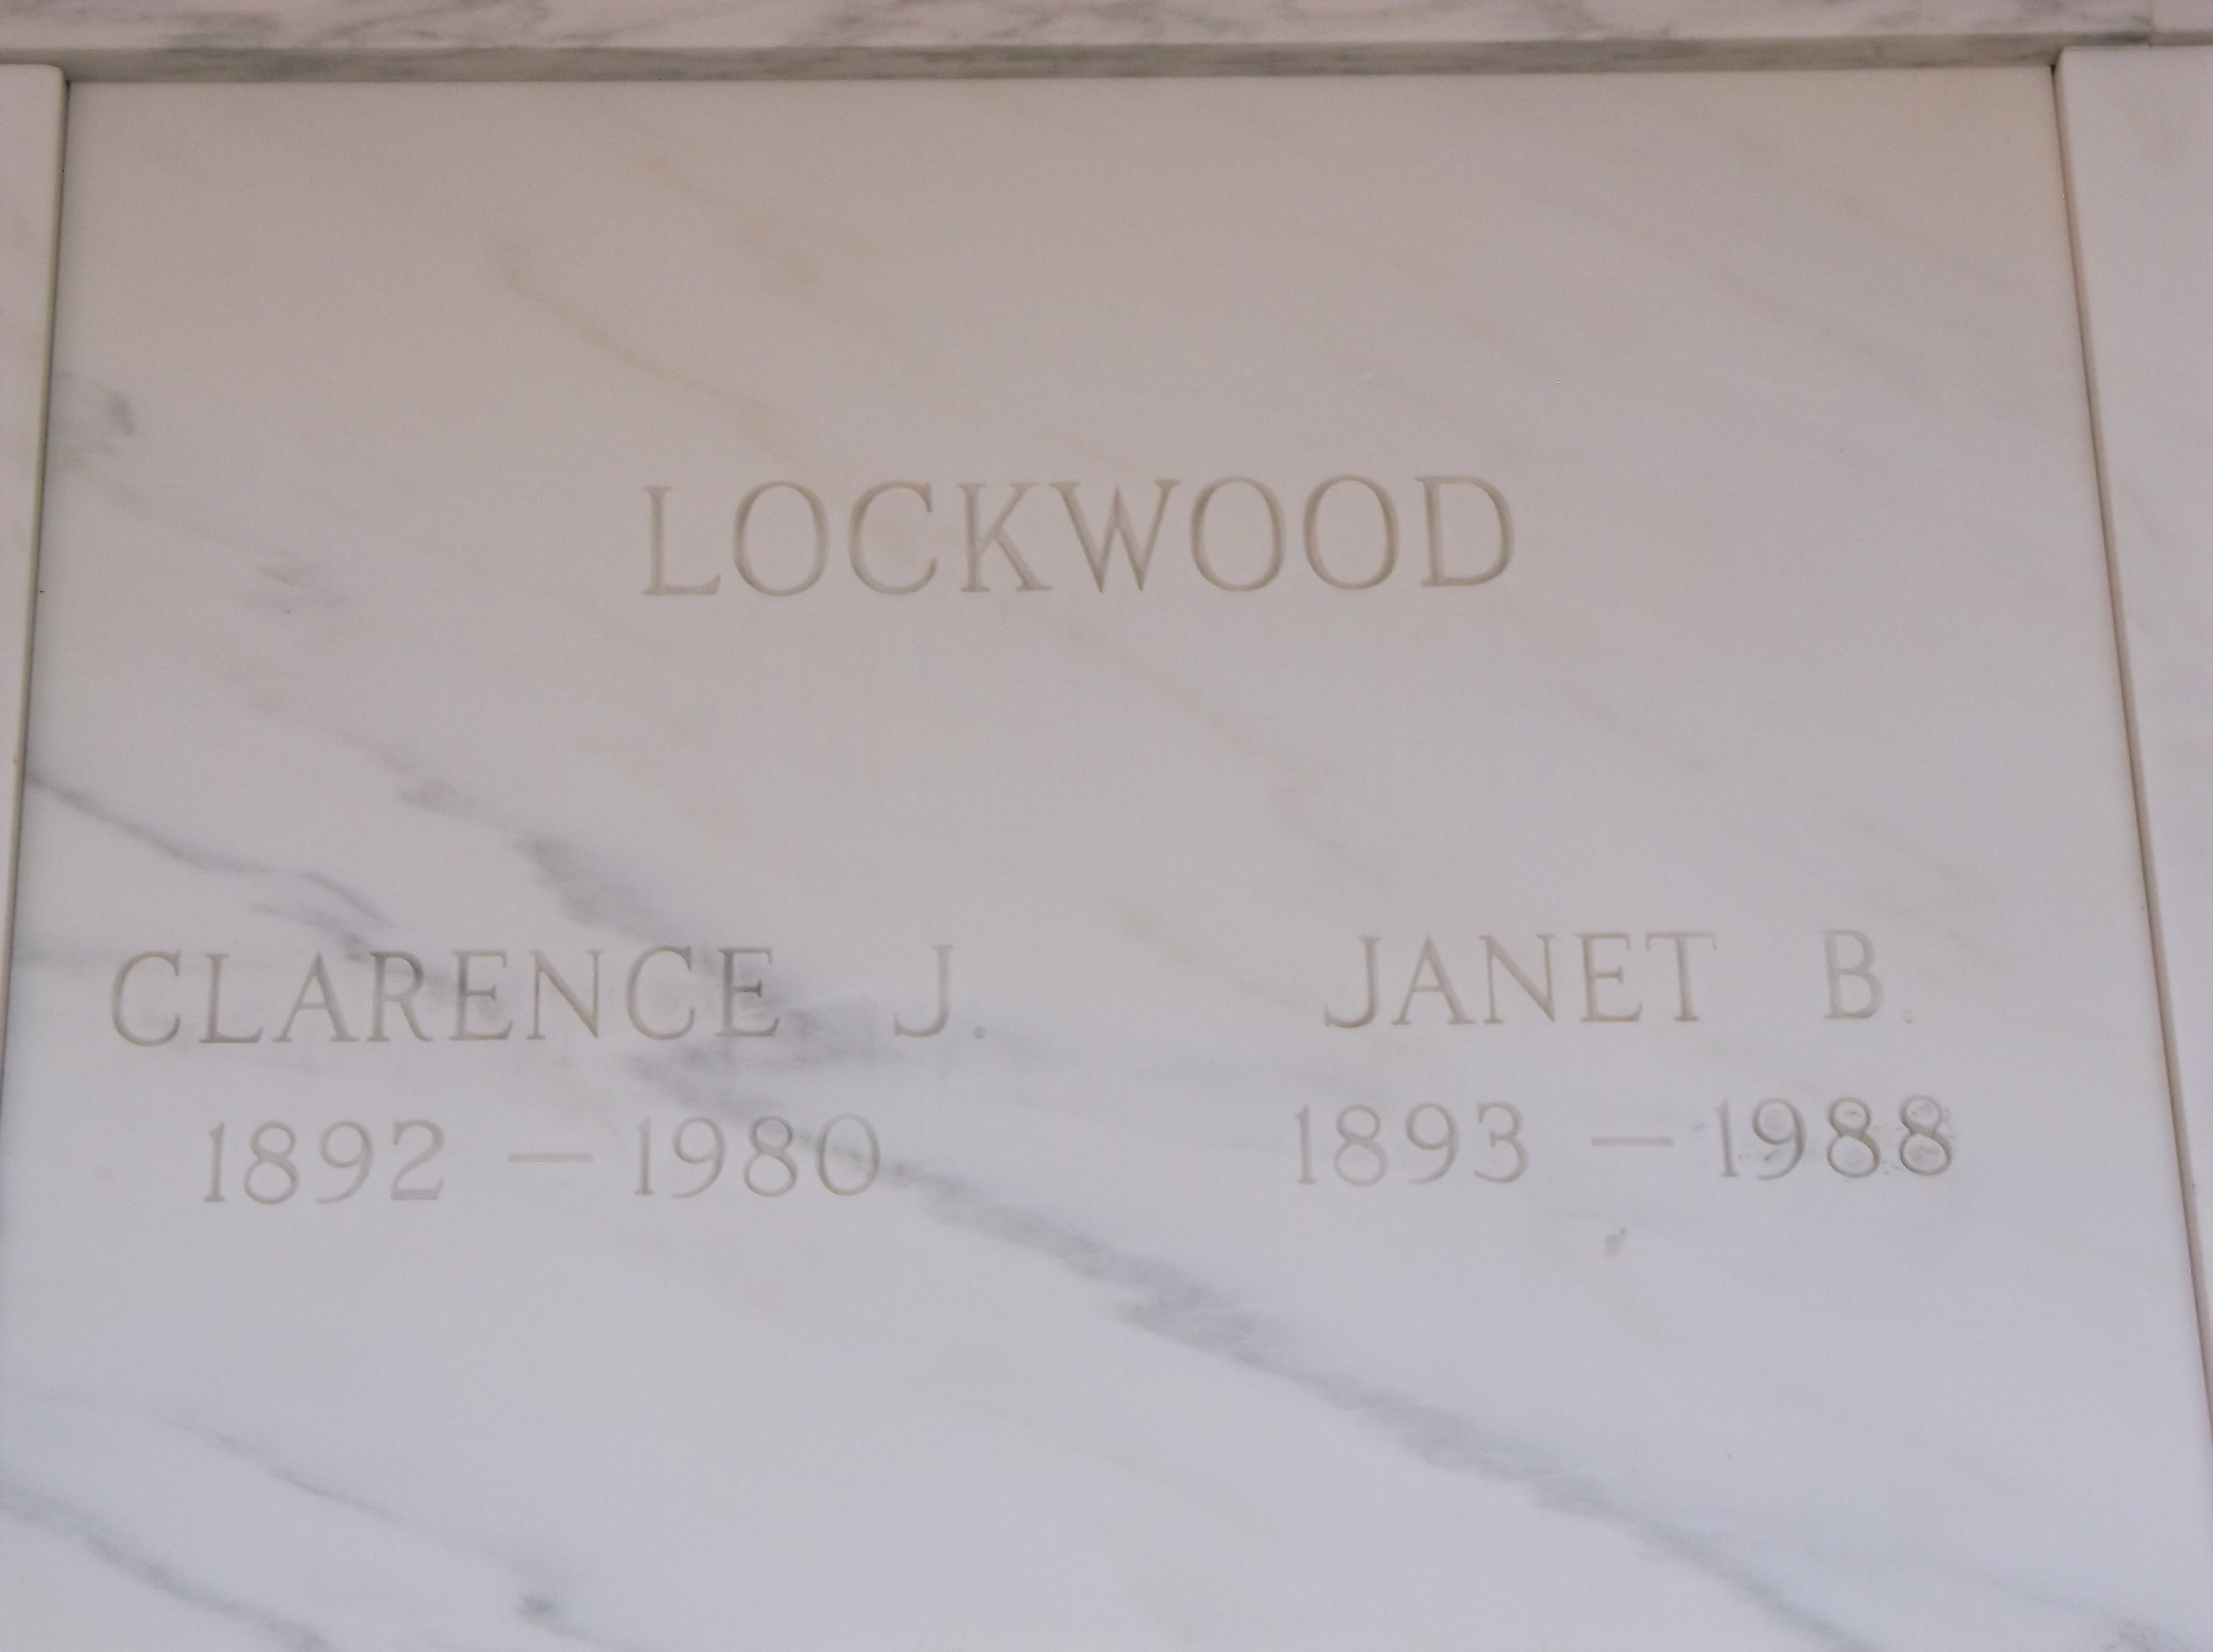 Janet B Lockwood